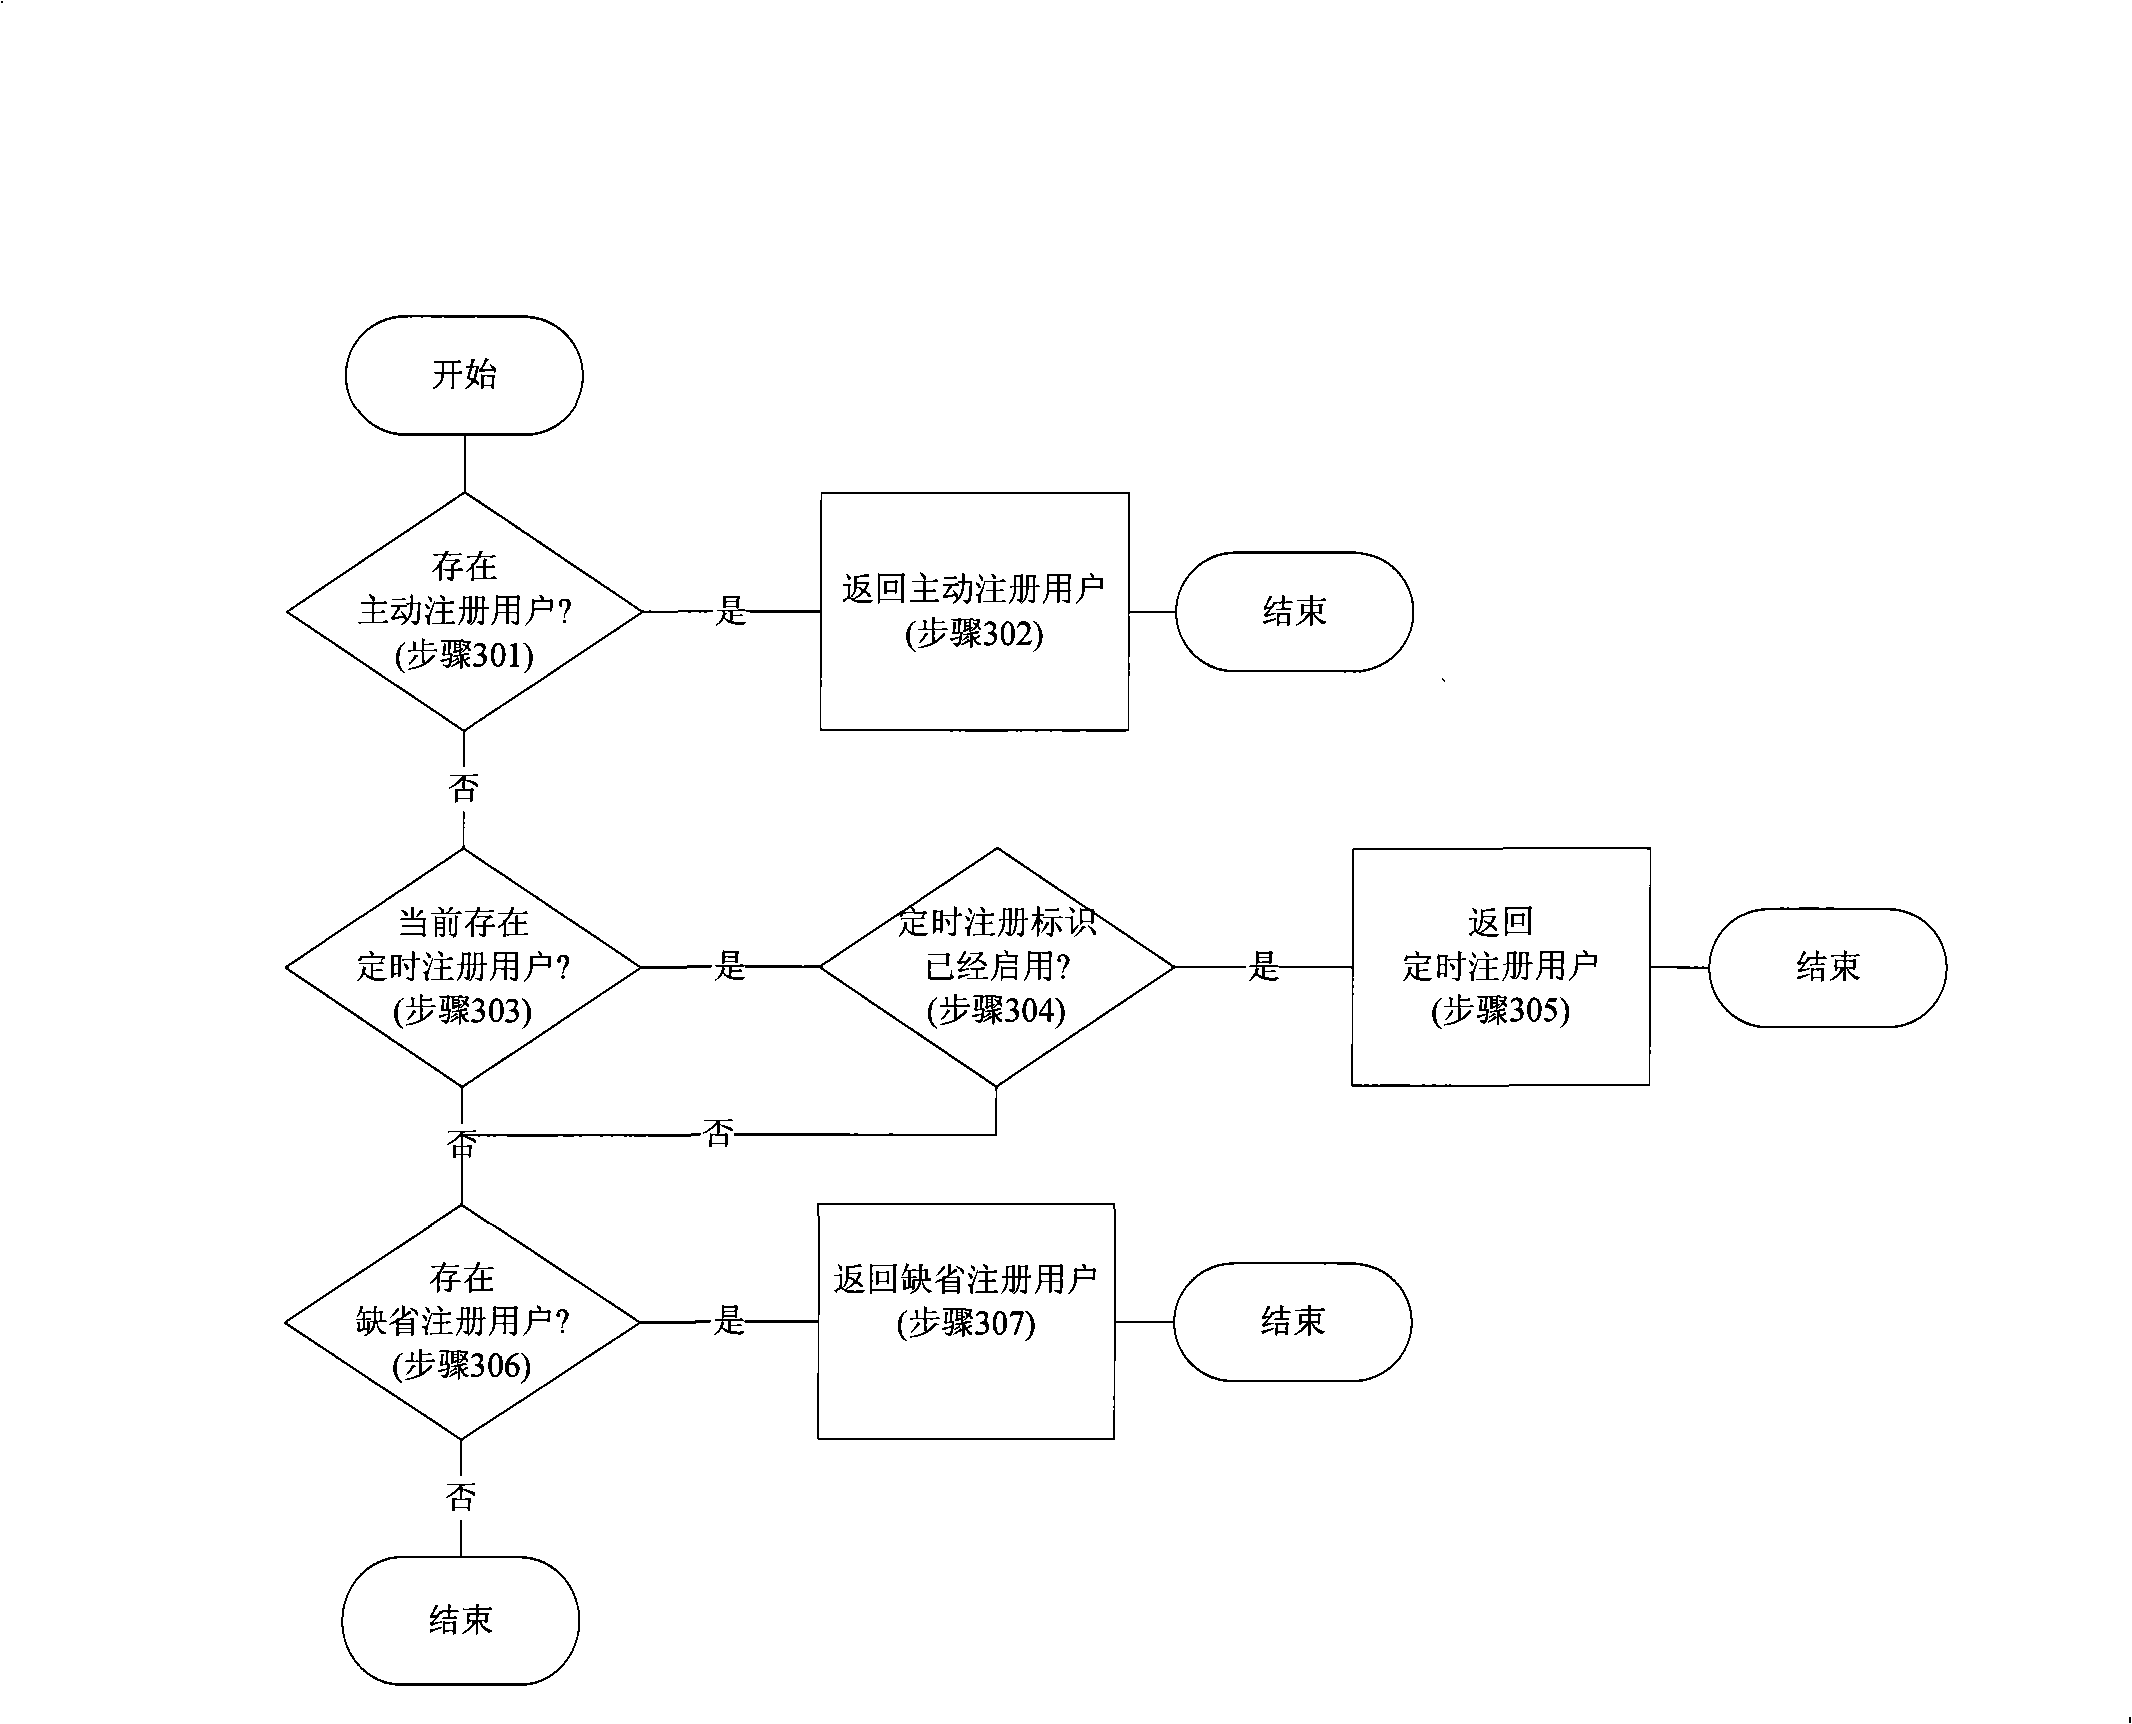 Method for timing registering and logging off post number of cluster system